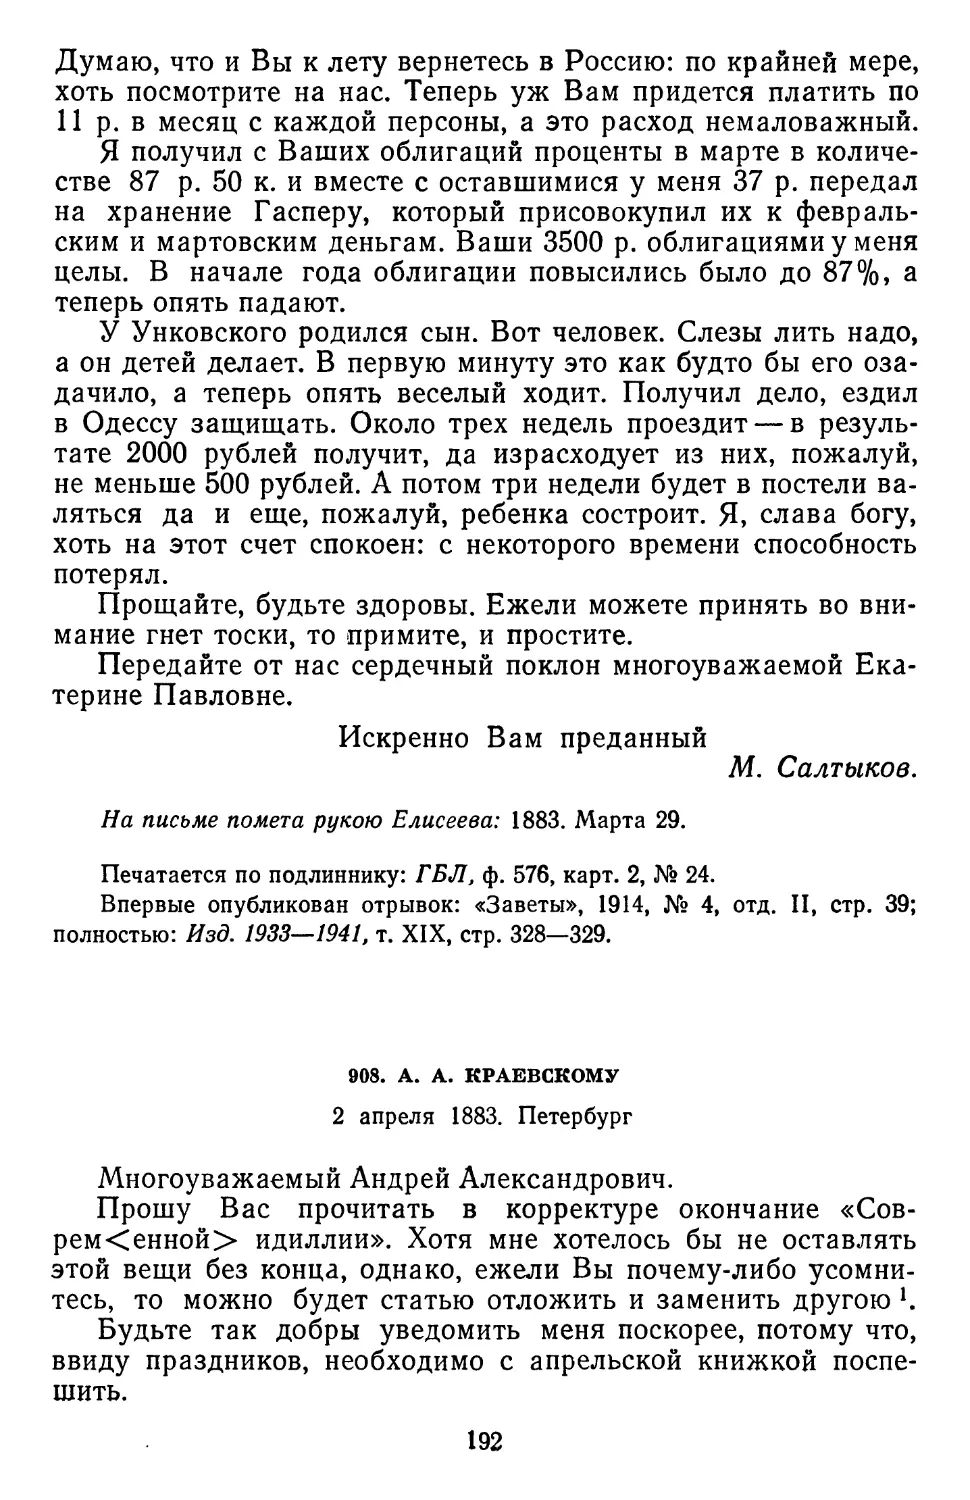 908.А. А. Краевскому. 2 апреля 1883. Петербург